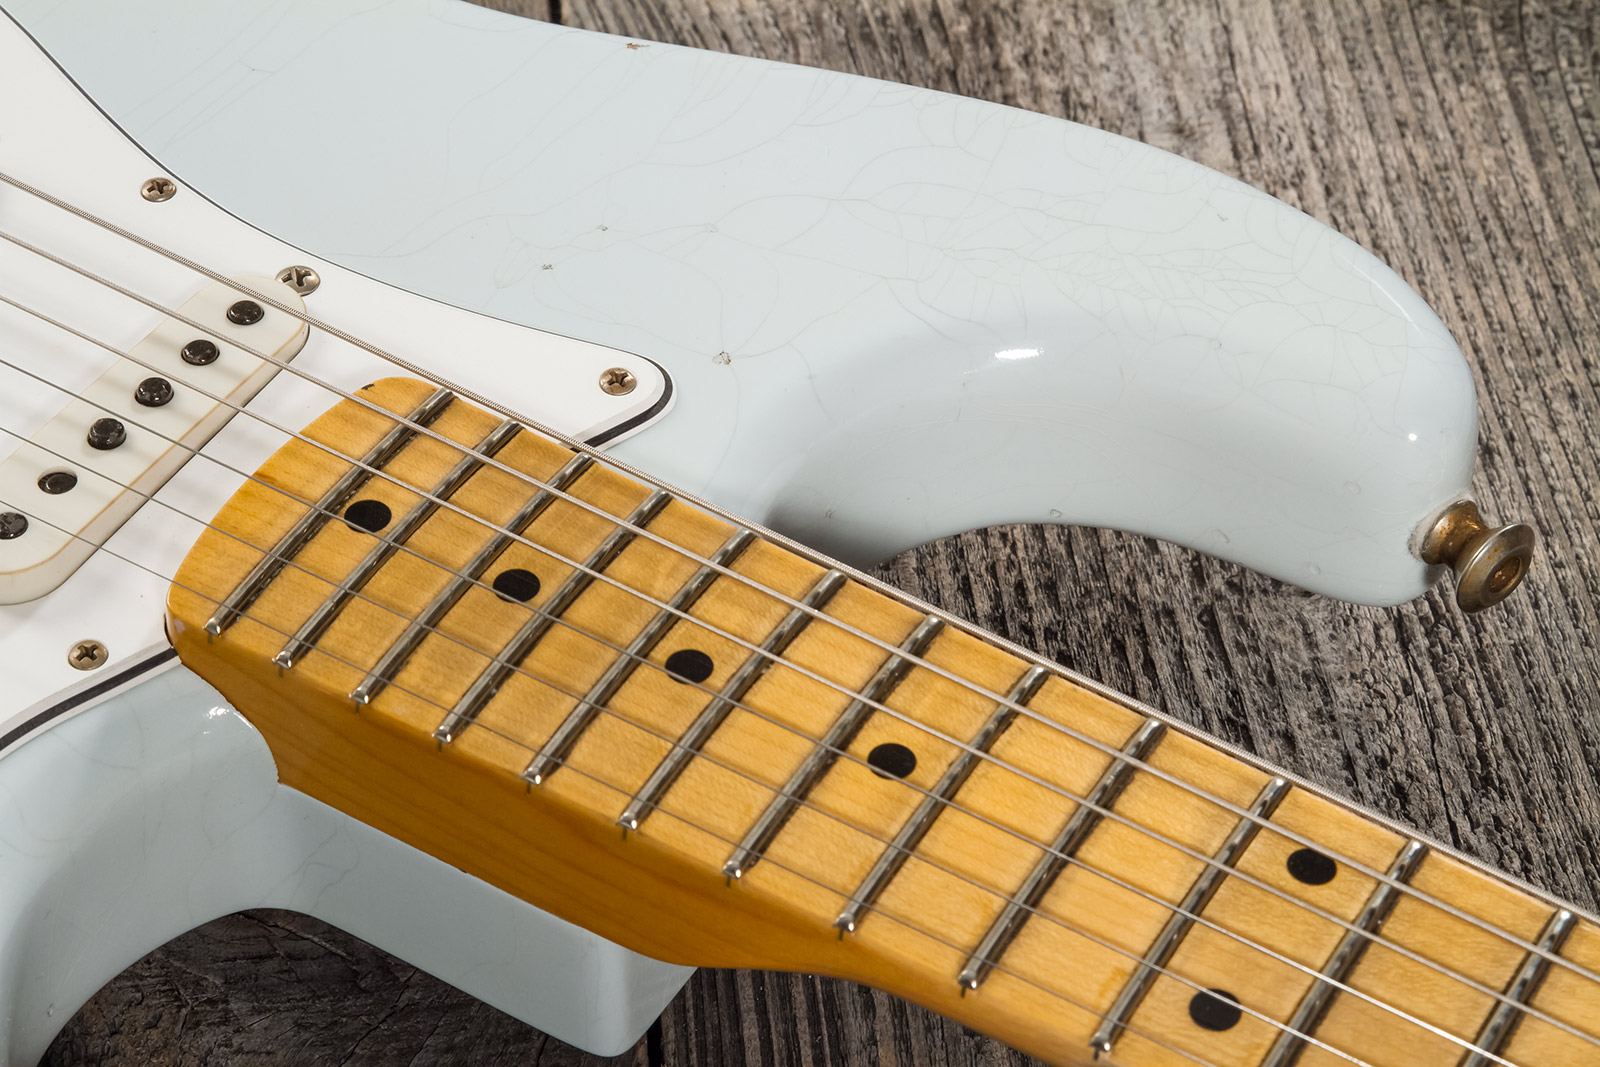 Fender Custom Shop Strat Tomatillo Special 3s Trem Mn #cz571194 - Journeyman Relic Aged Sonic Blue - Guitarra eléctrica con forma de str. - Variation 